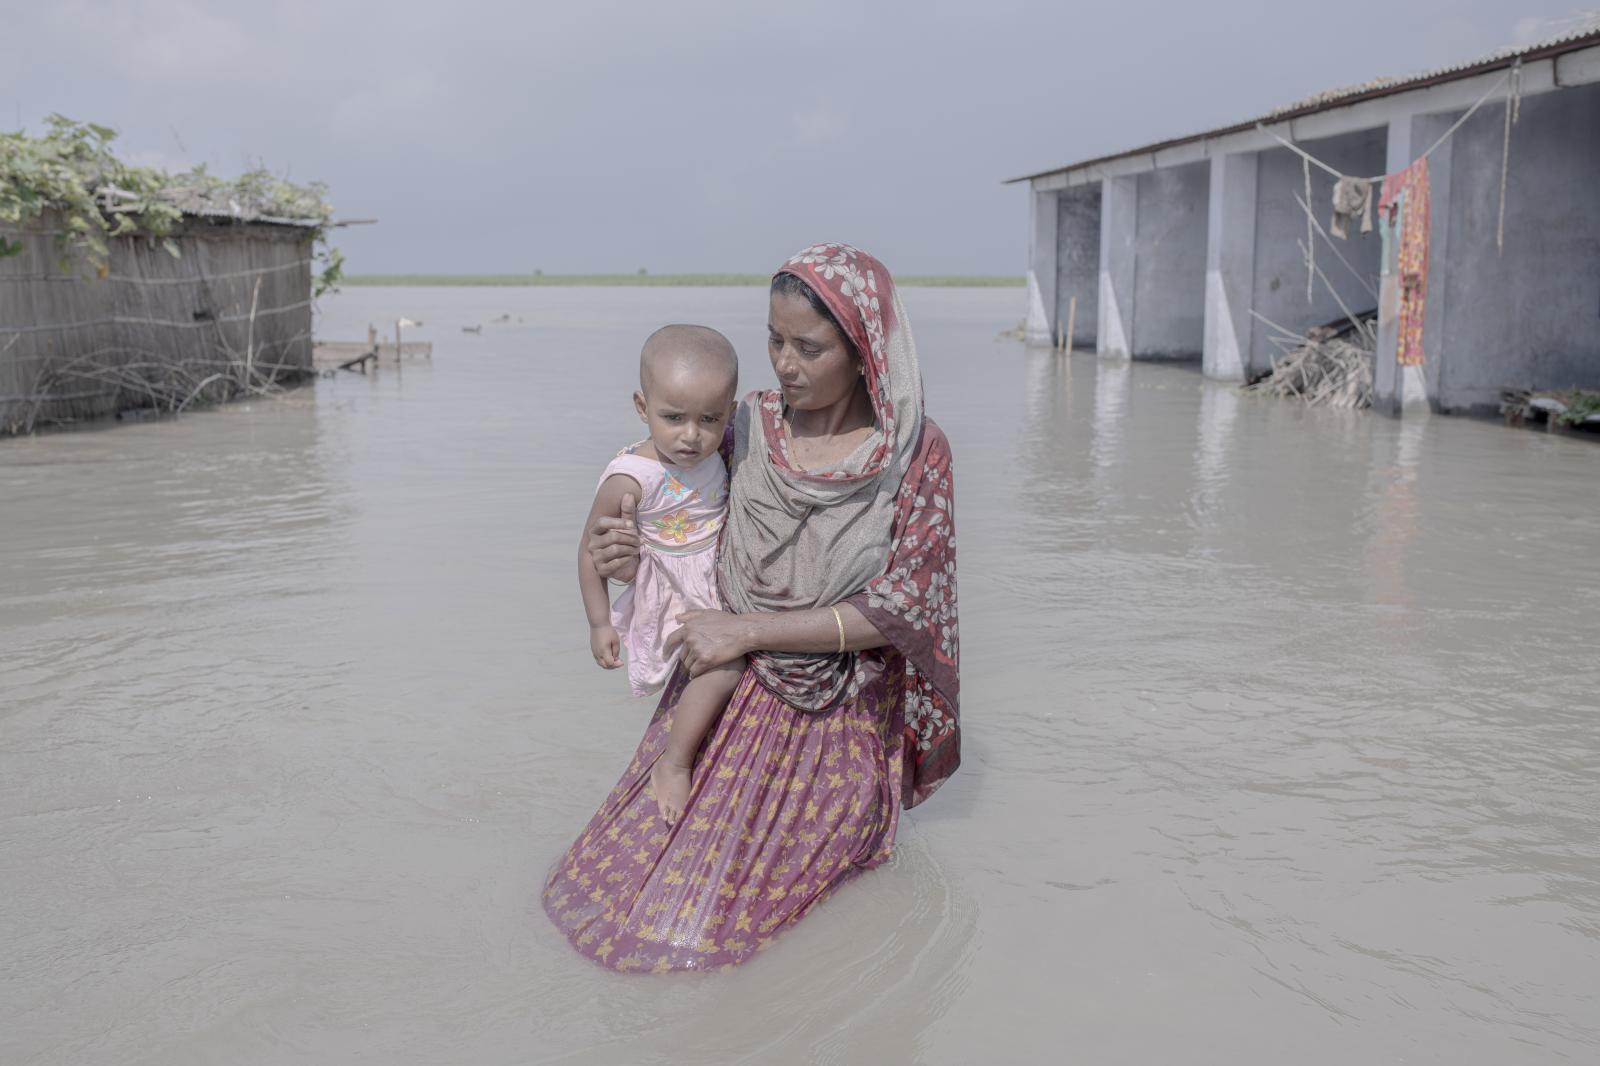 Julekha Begum carries her child through a flooded street.